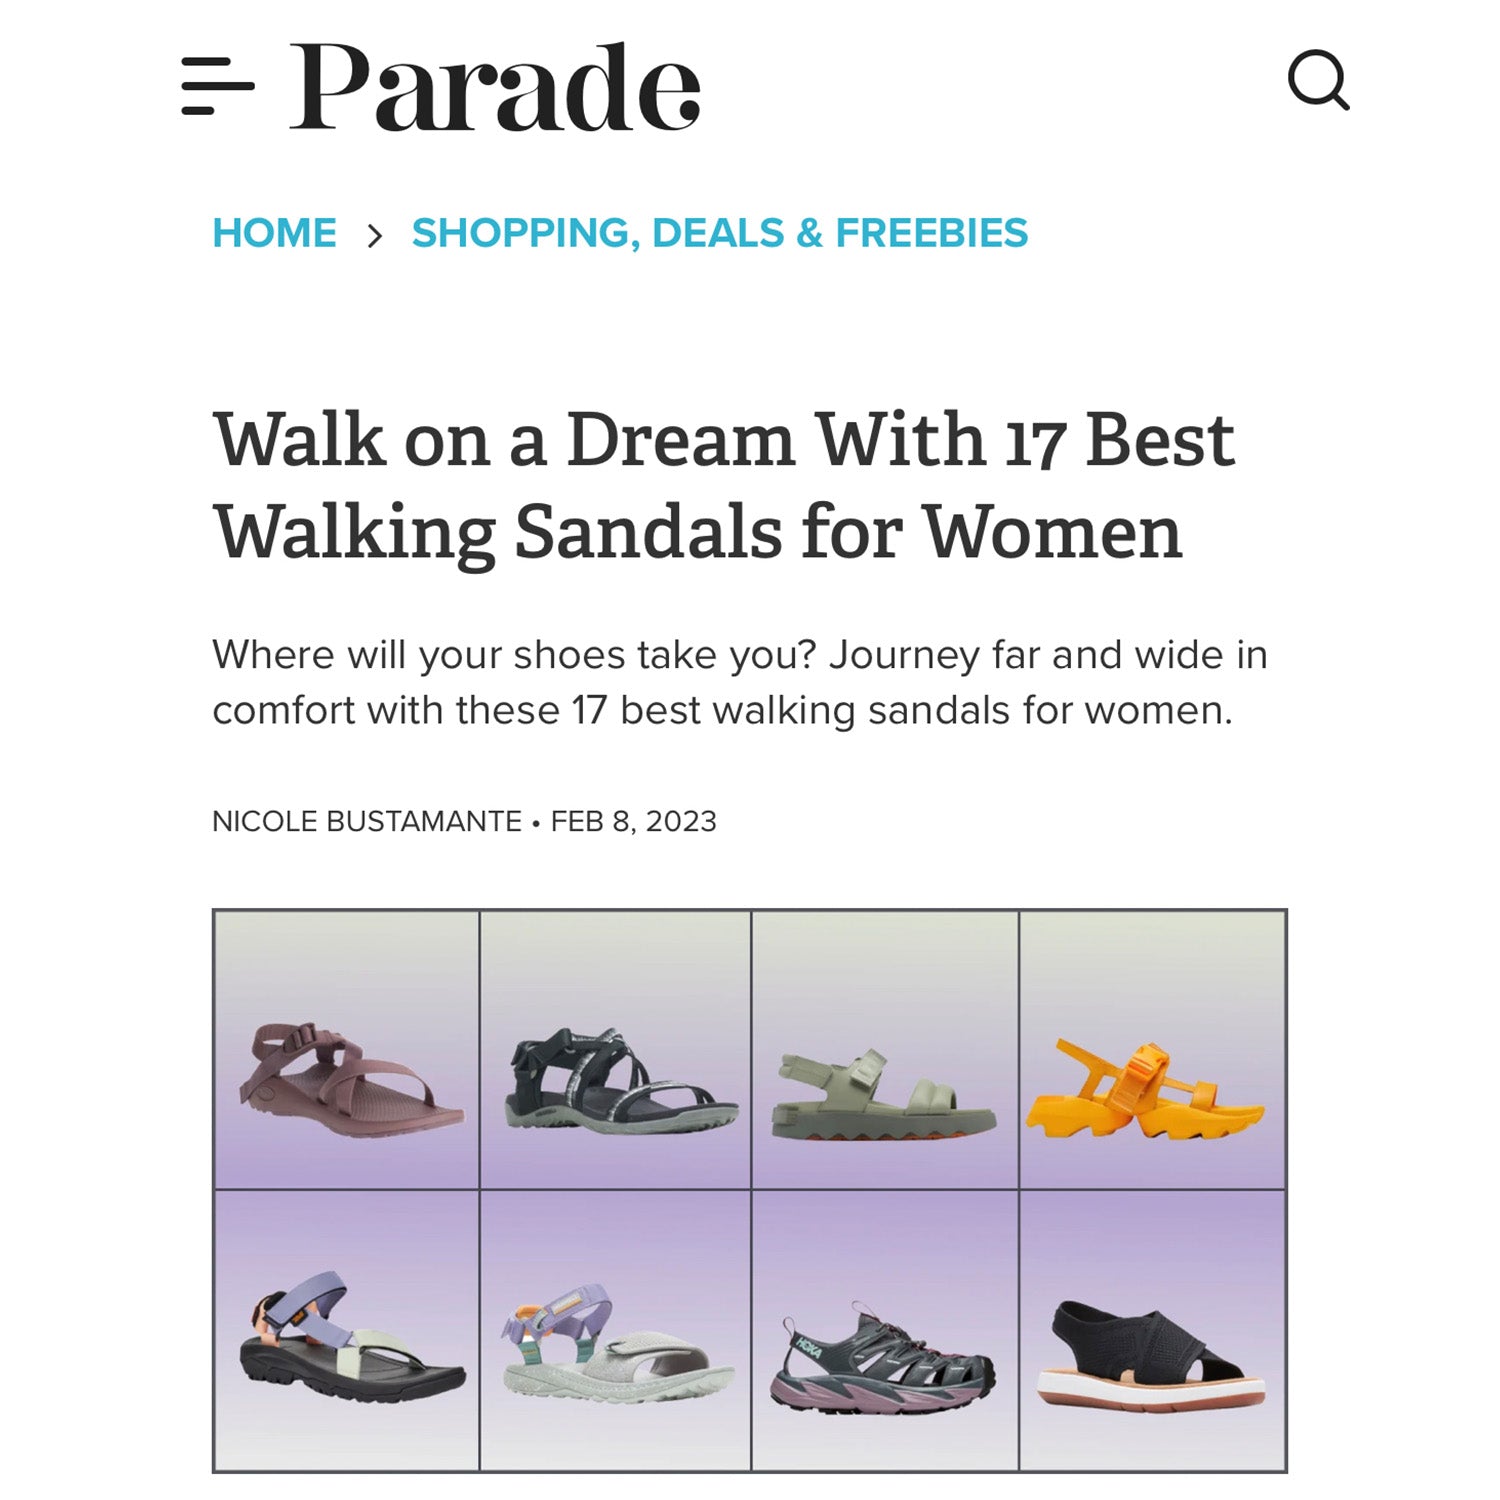 Parade - 17 Best Walking Sandals for Women